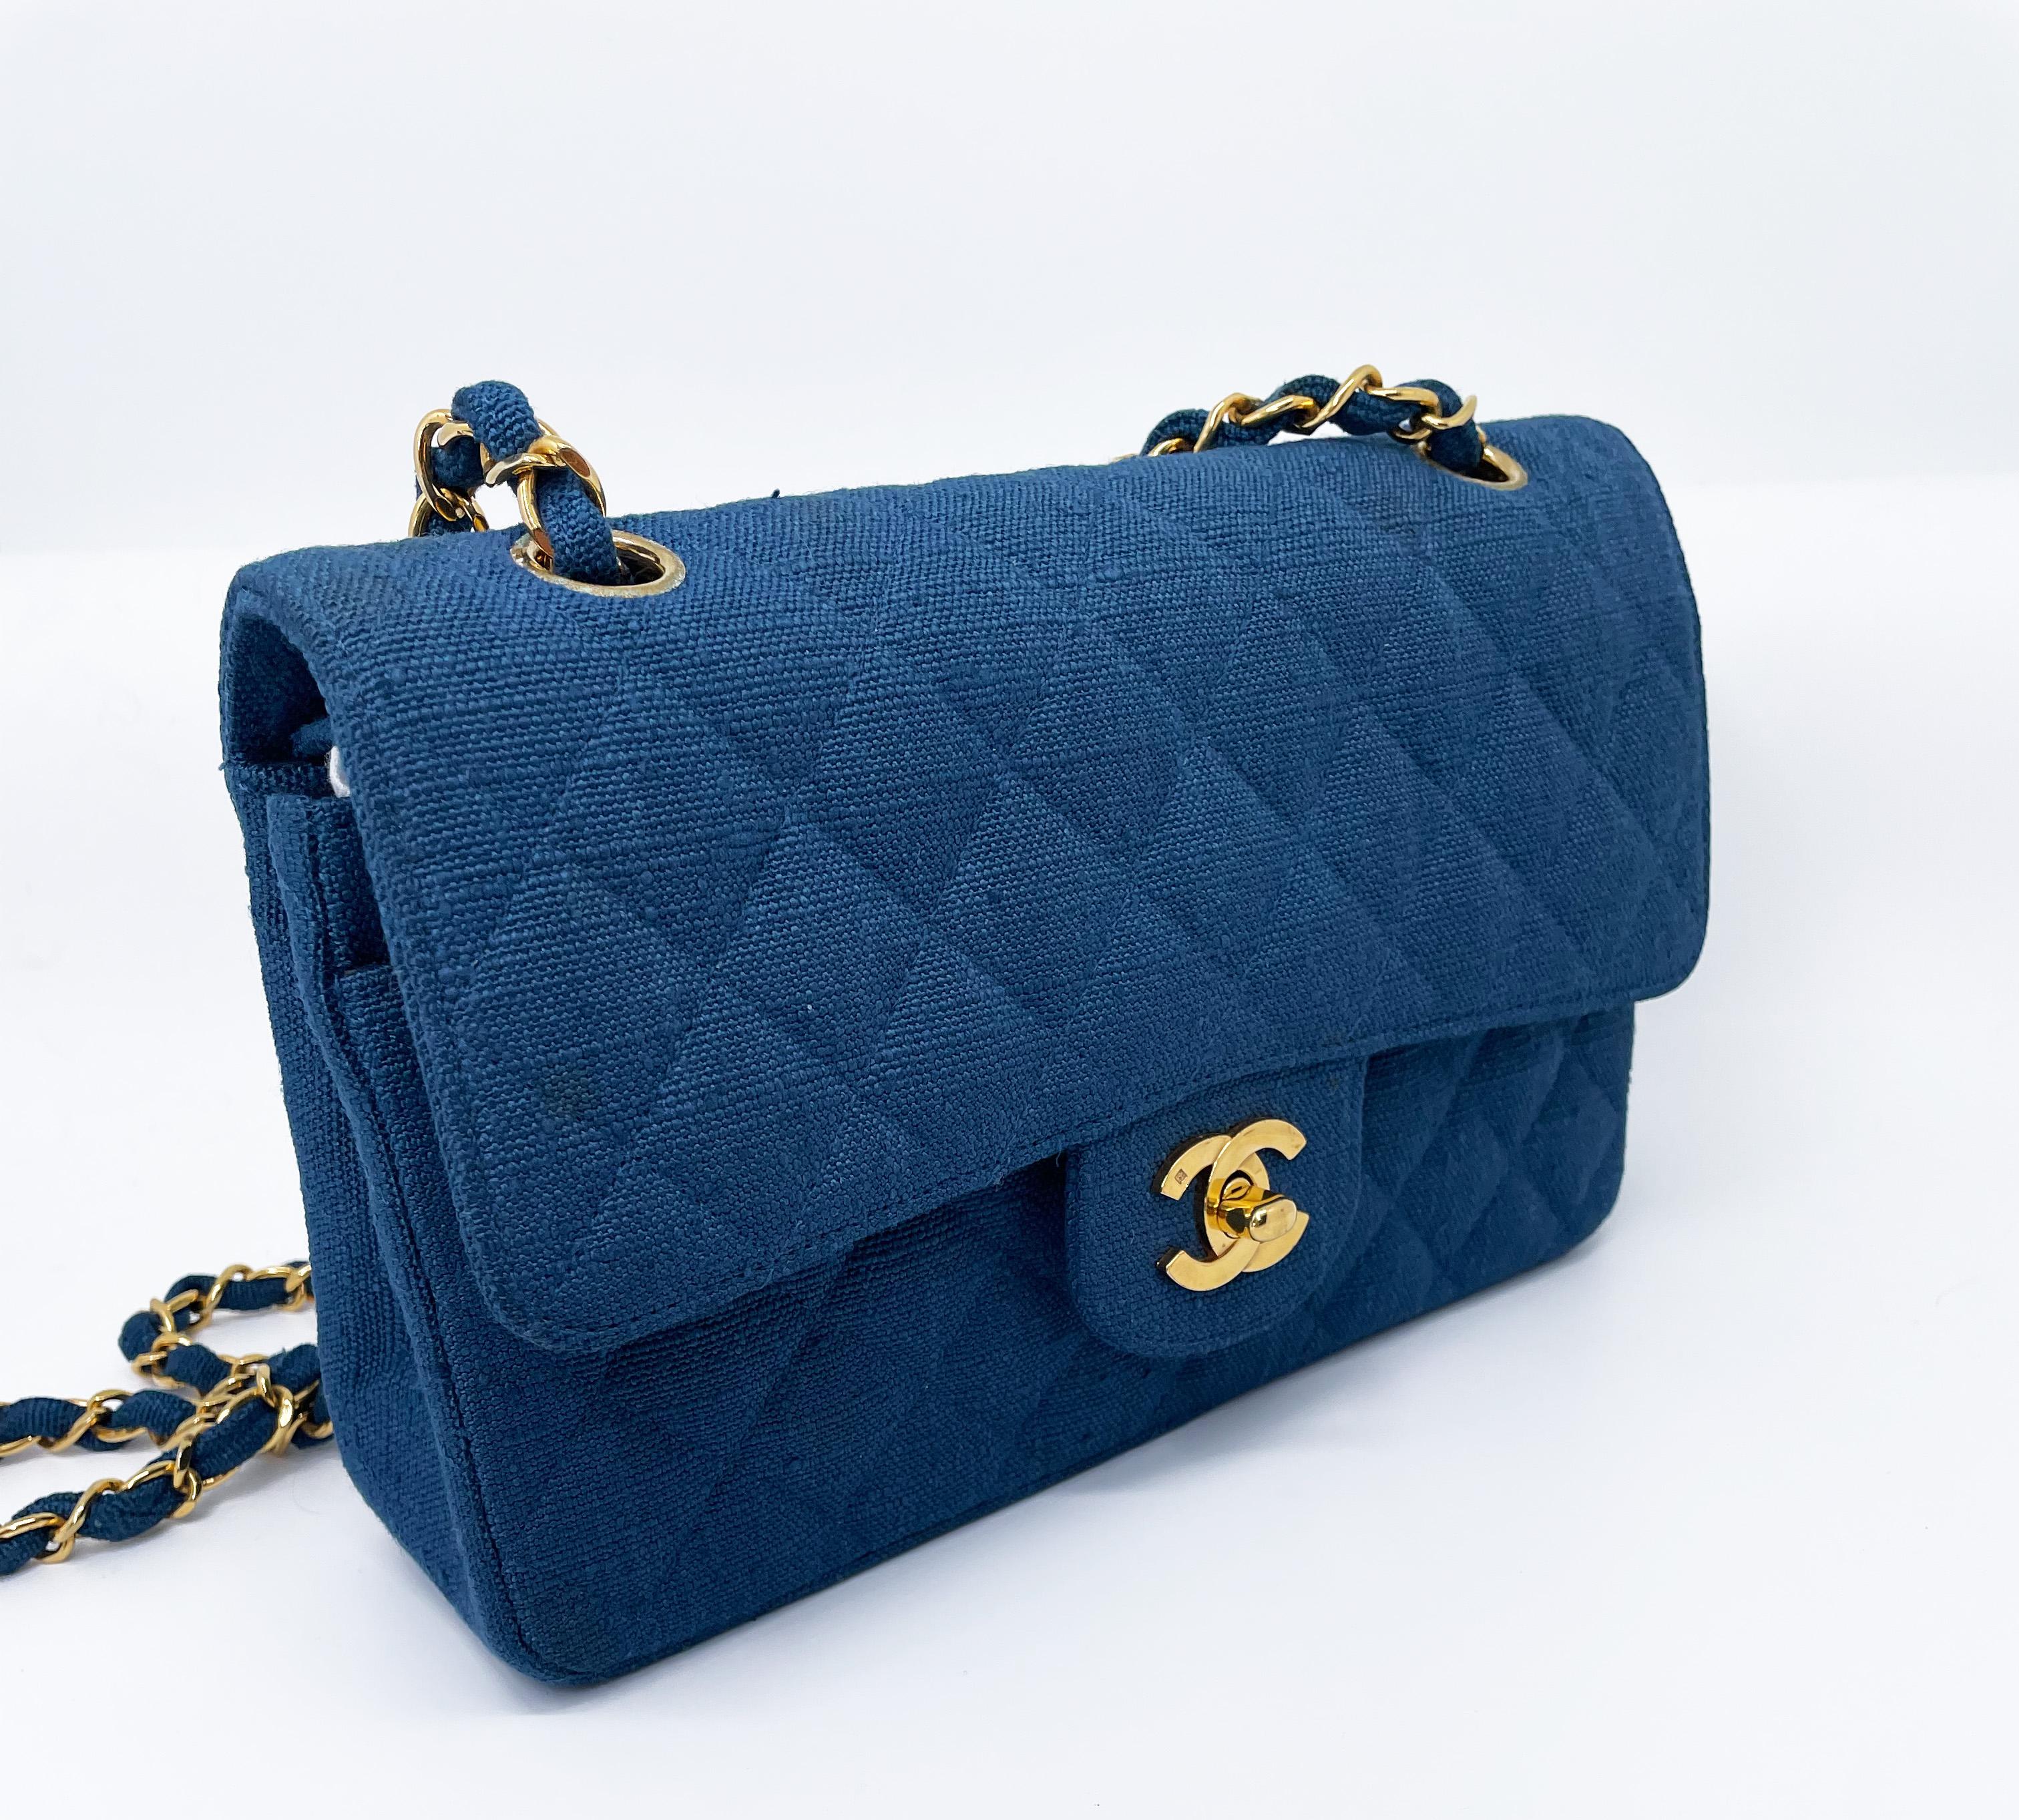 Women's or Men's Small Classic Chanel Blue Denim Bag